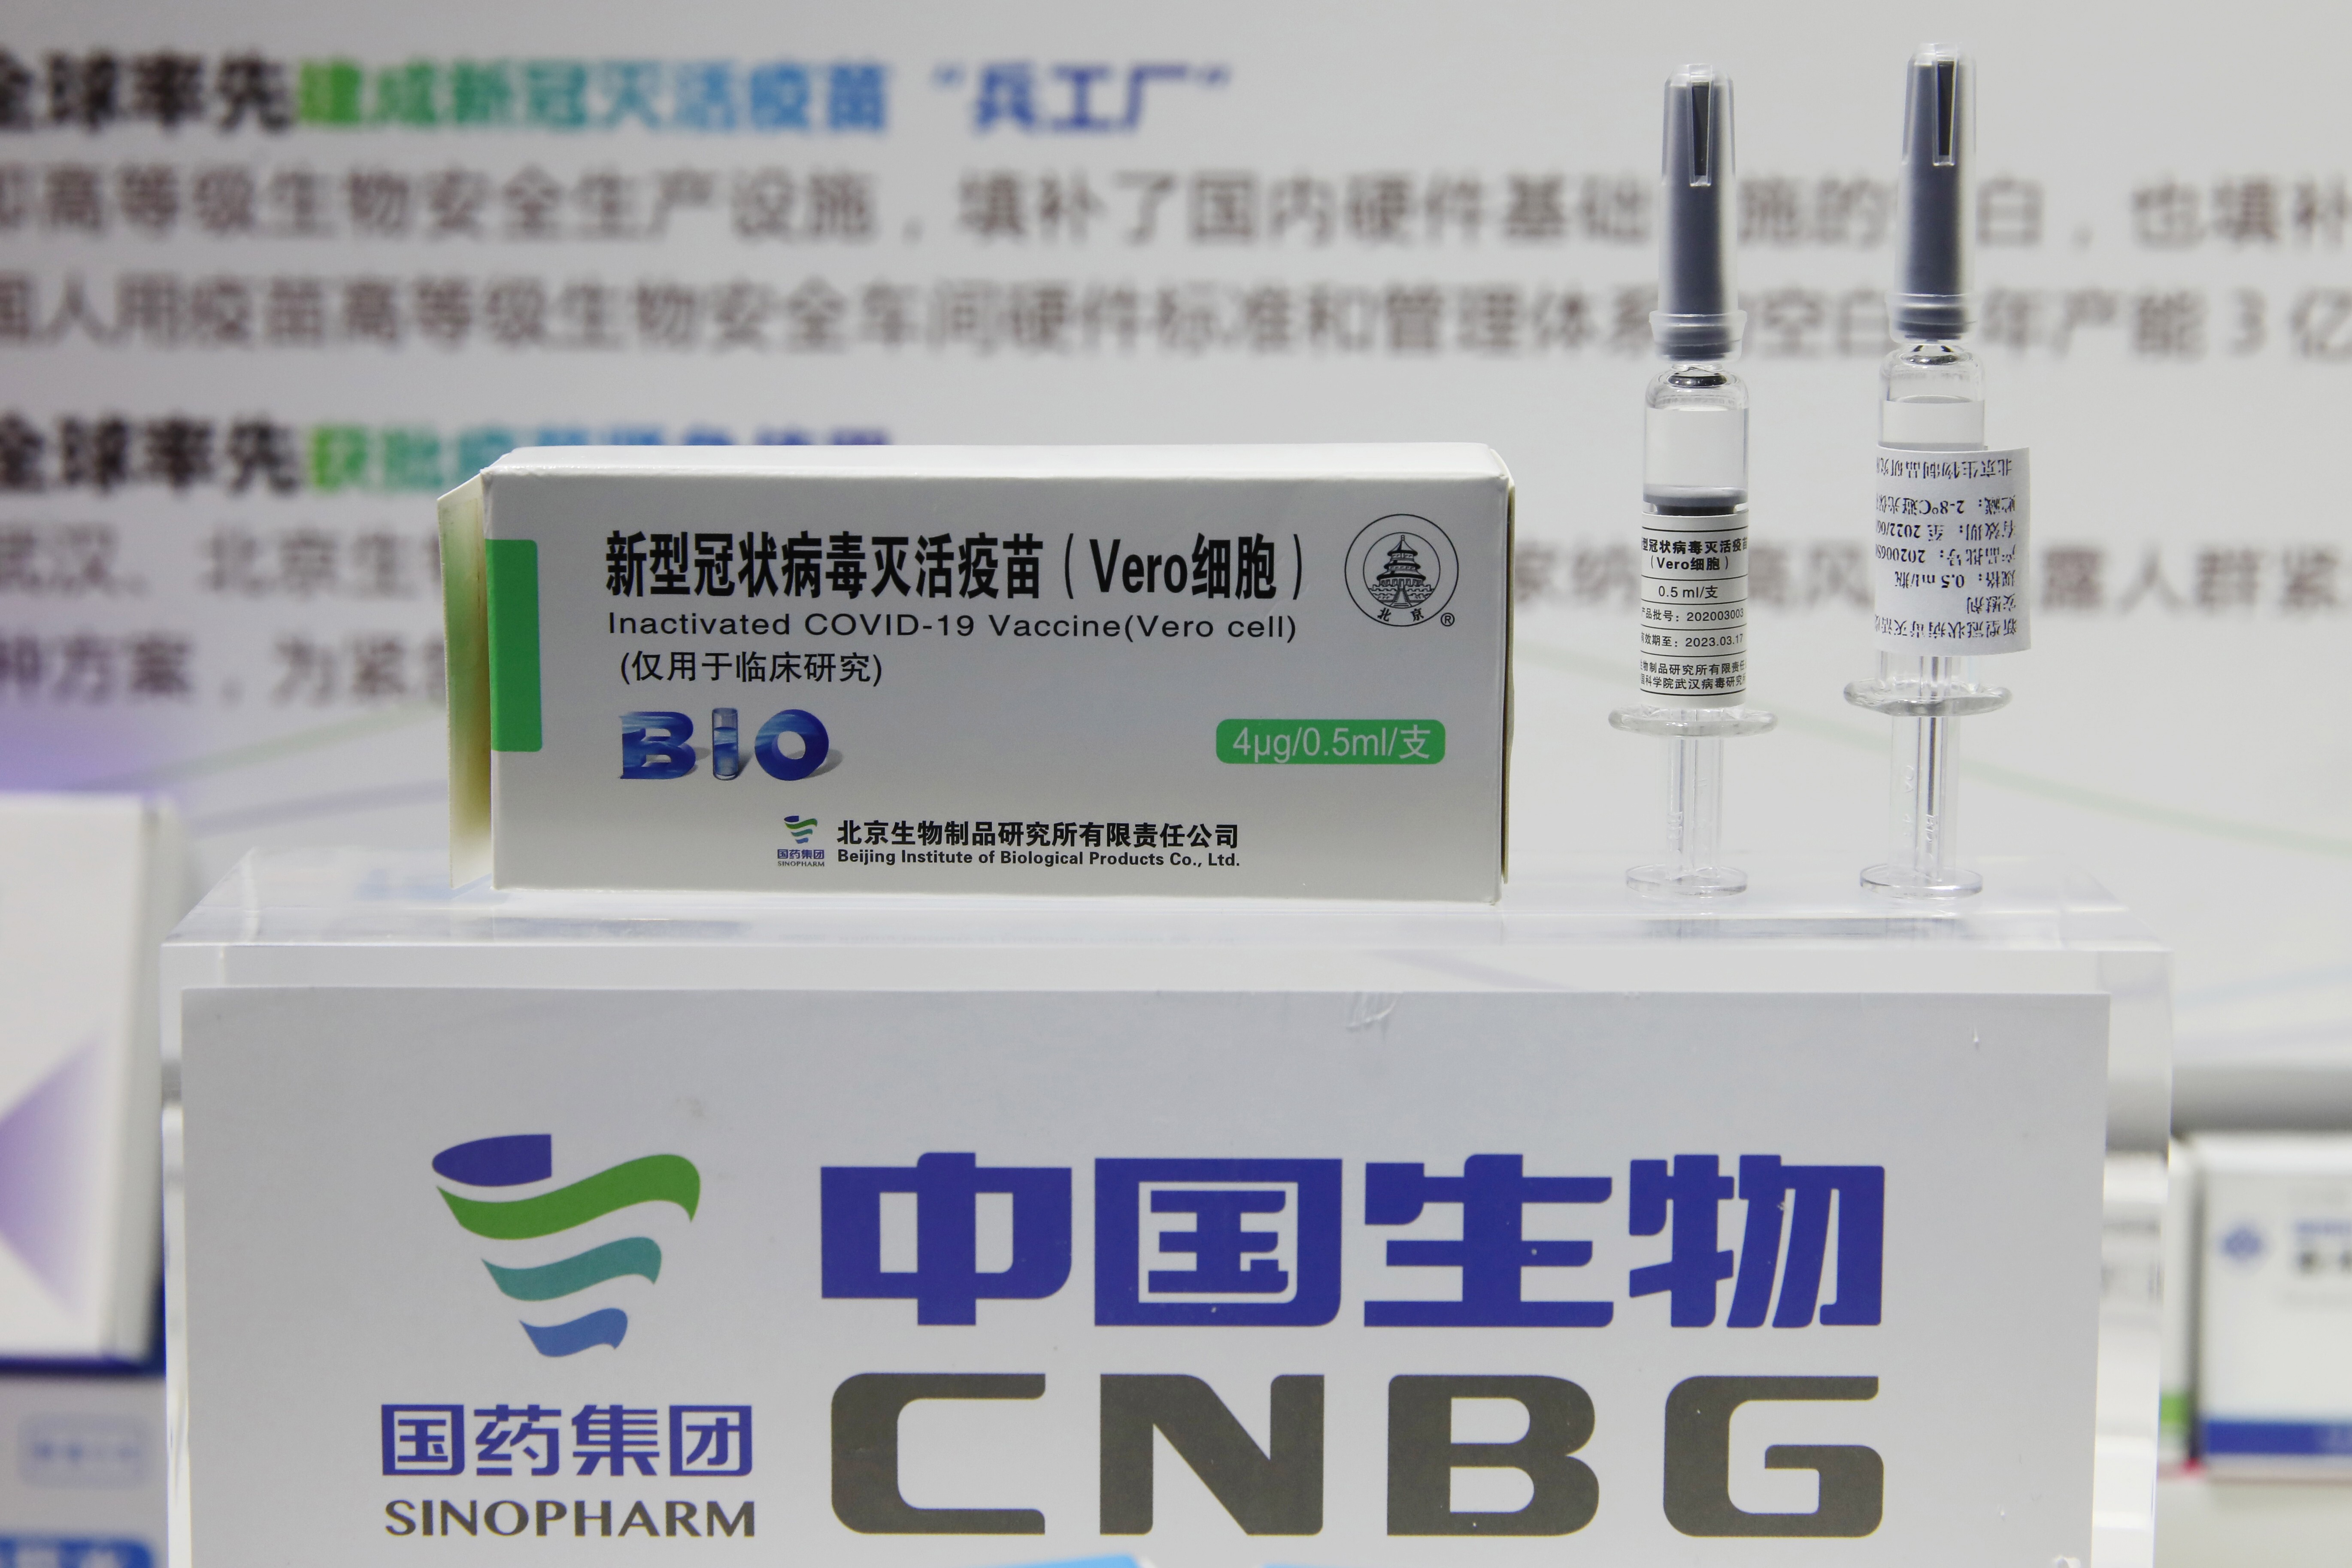 Китайская вакцина. Vero Cell Sinopharm. Covid-19 вакцина китайская. Covid-19 vaccine (Vero Cell) inactivated. Китайская вакцина от коронавируса.